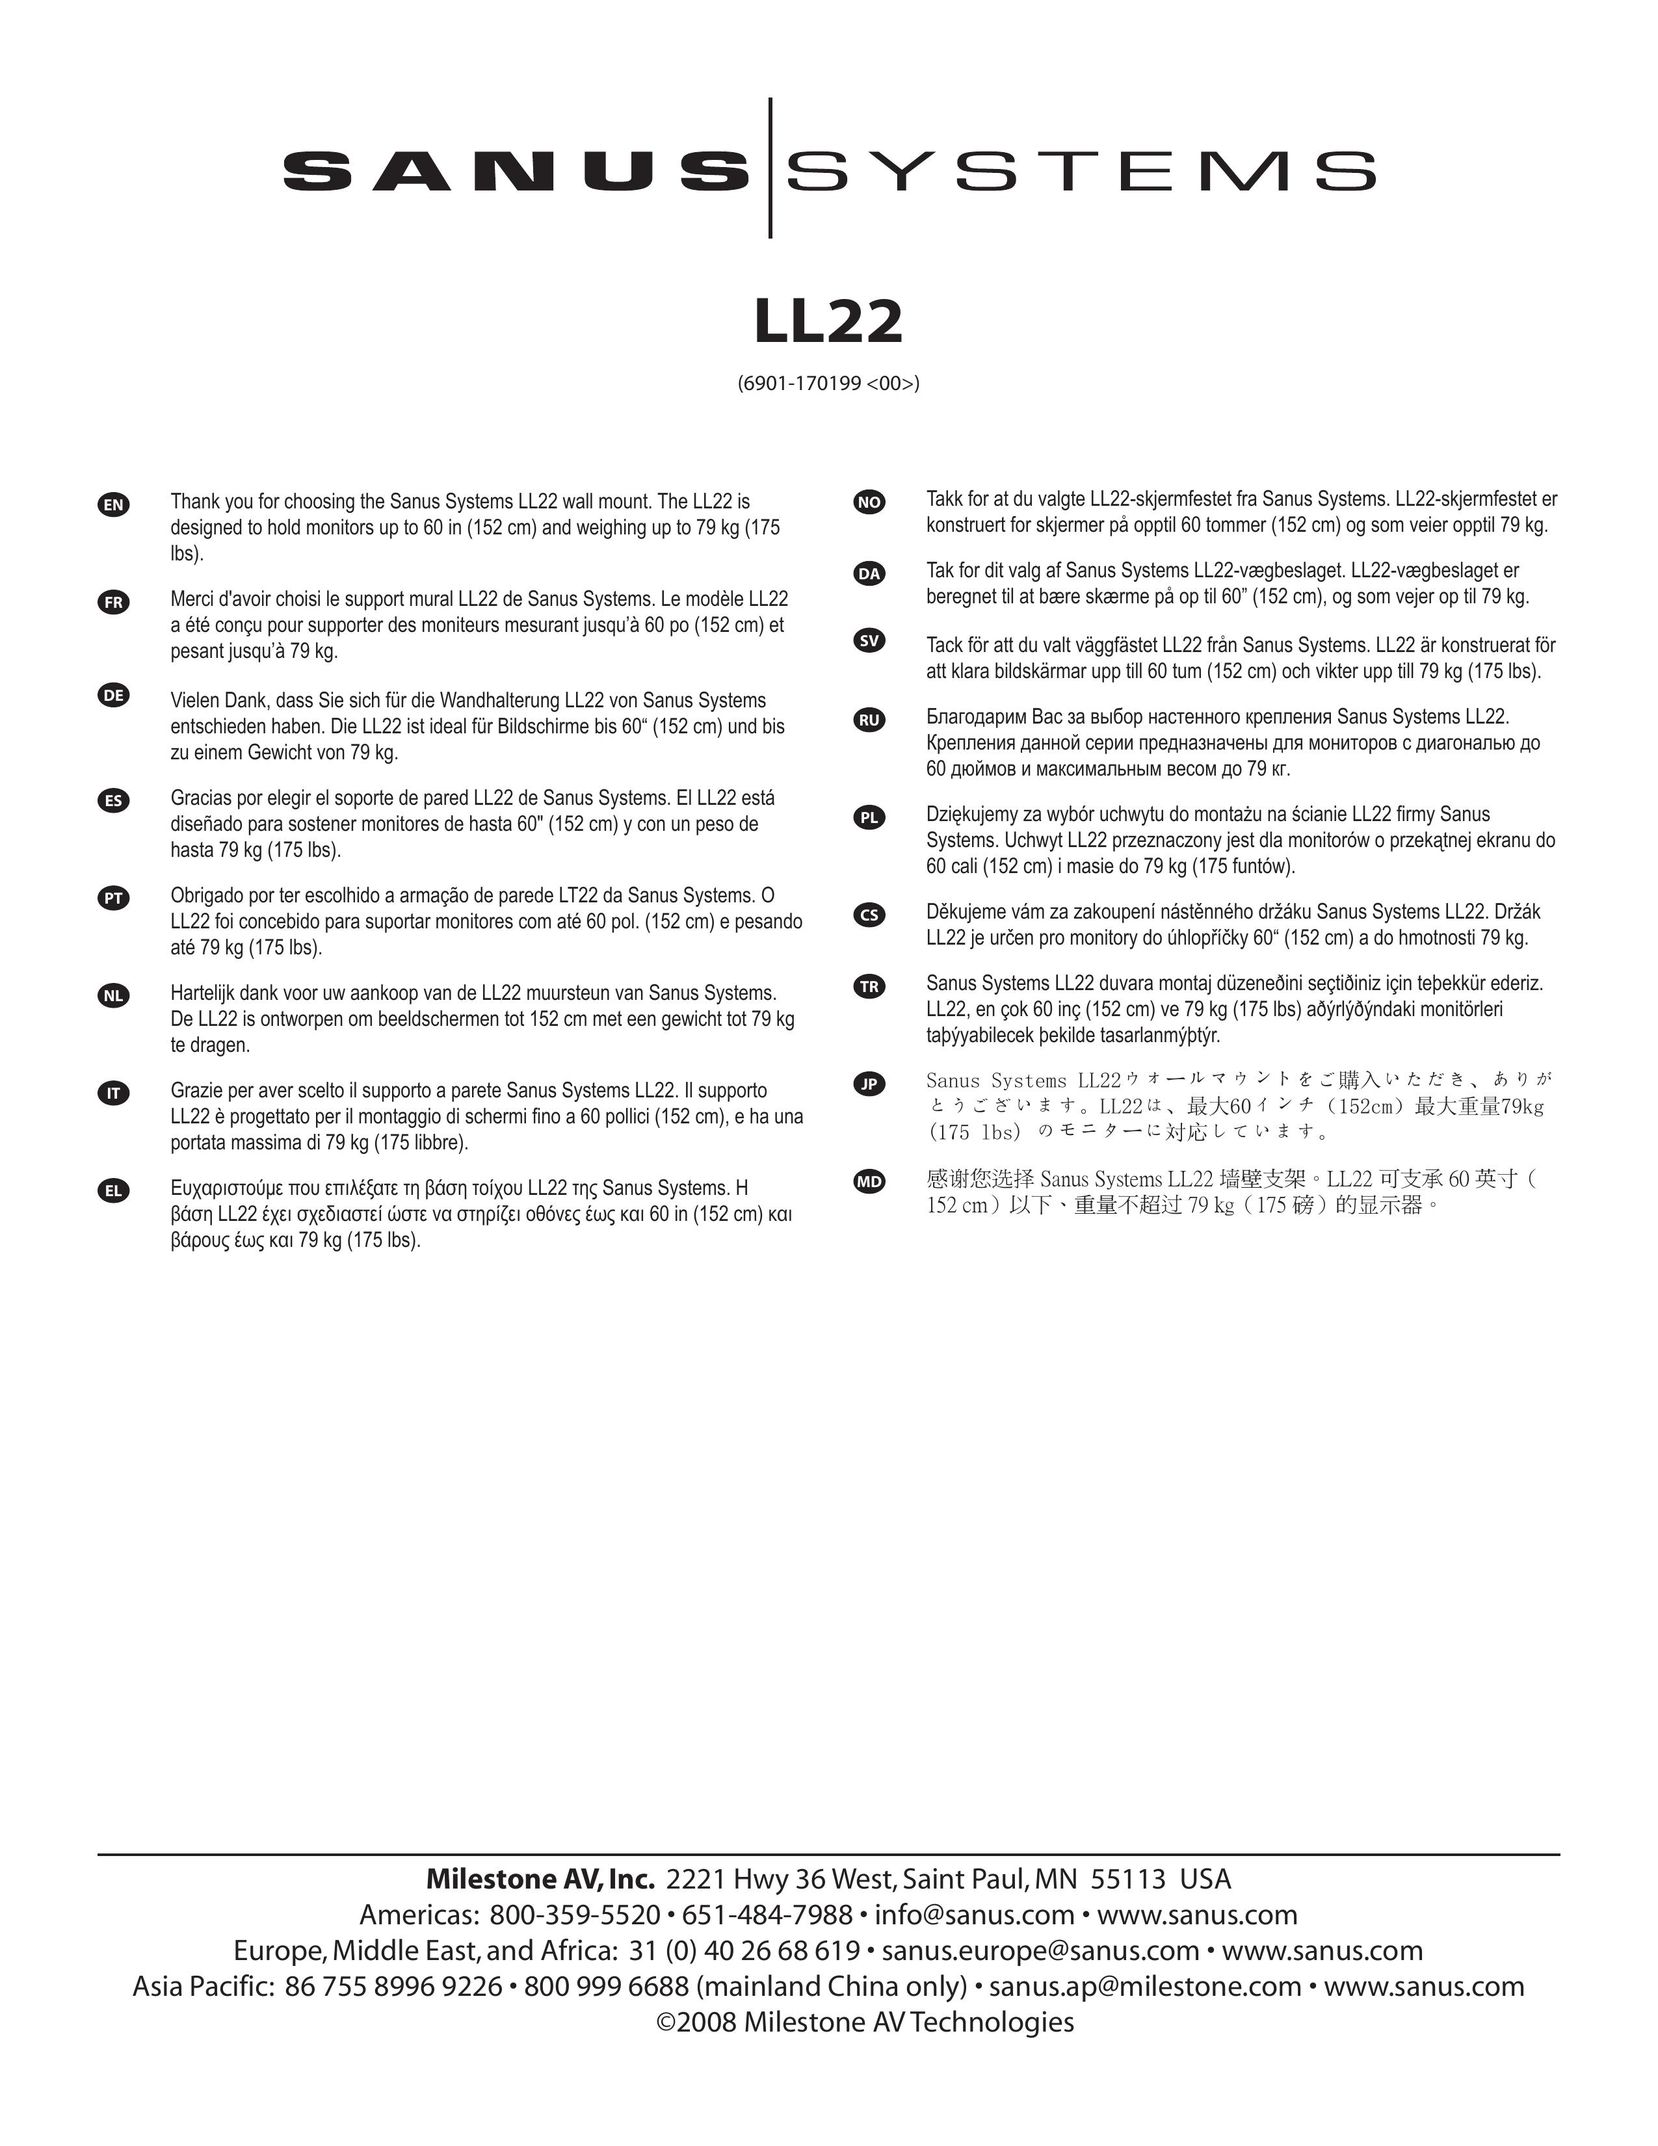 Sanus Systems LL22 Indoor Furnishings User Manual